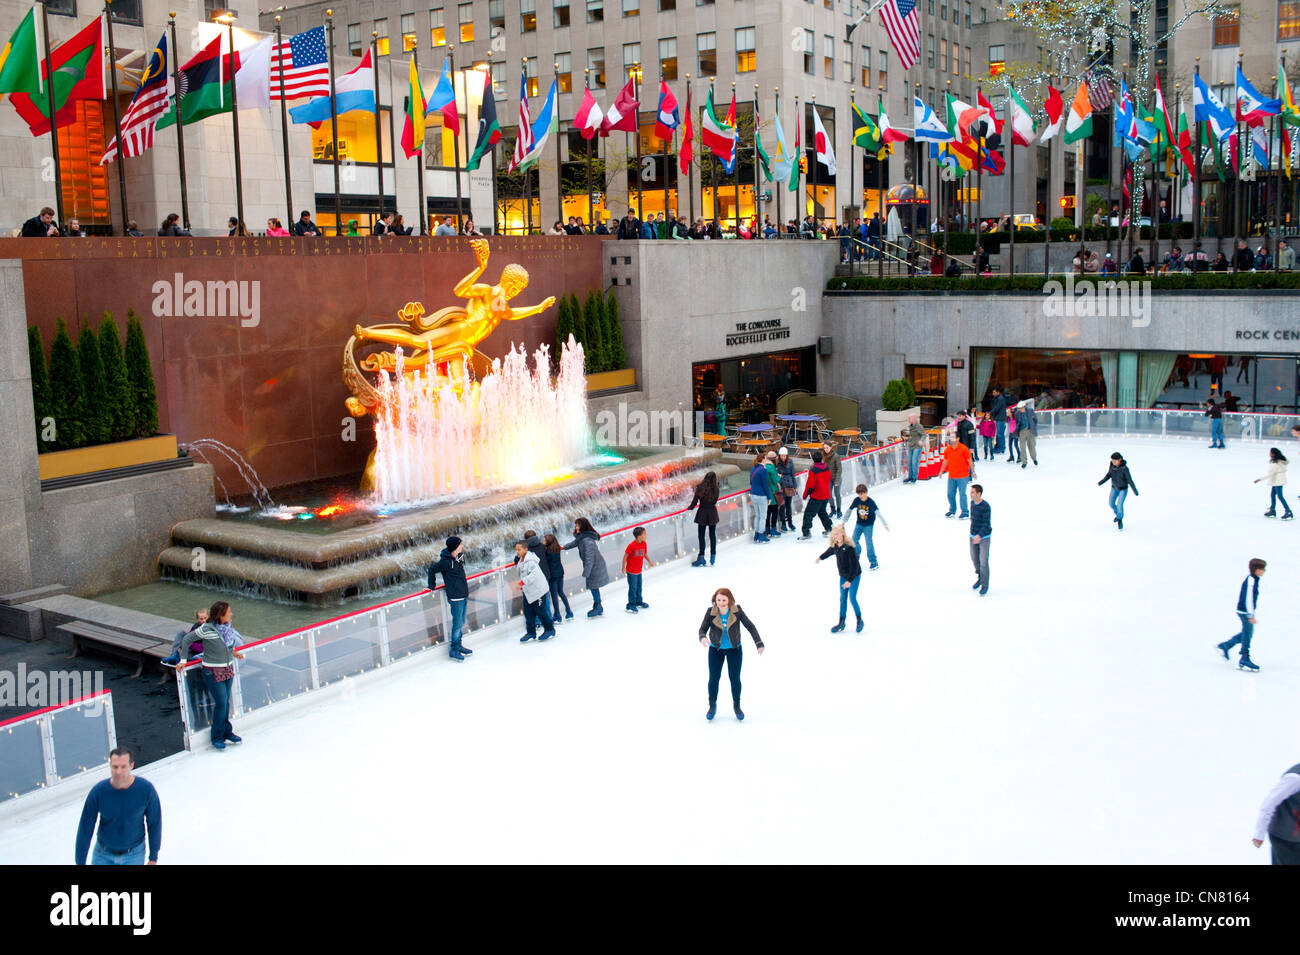 USA  New York City Rockefeller Center Ice Skating Rink winter fun outdoors skate 30 rock NBC  Prometheus Statue Stock Photo